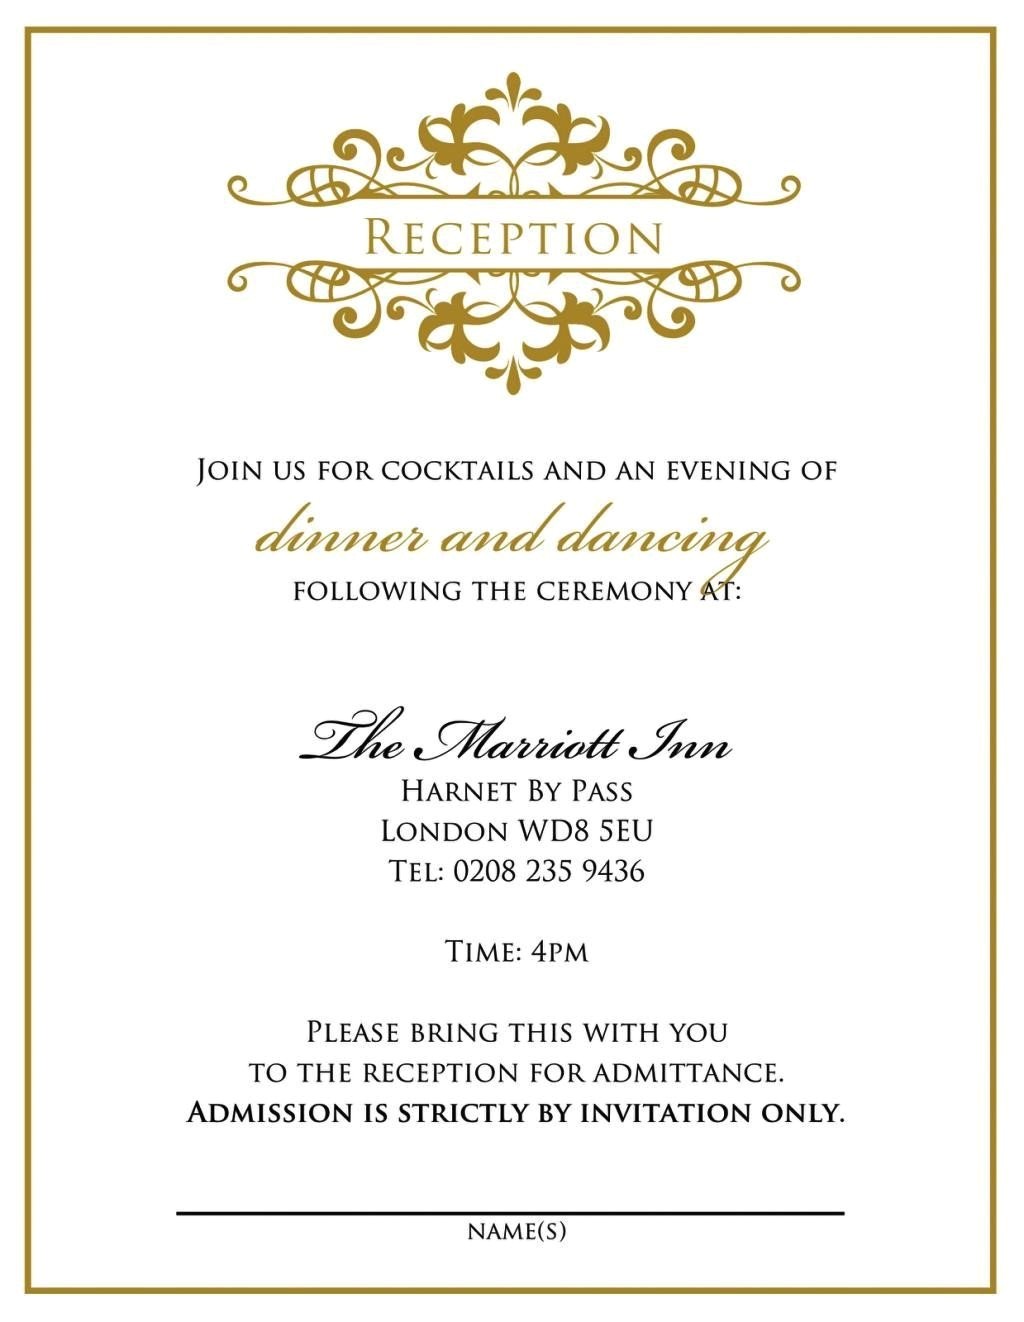 wedding invitation wording no parents